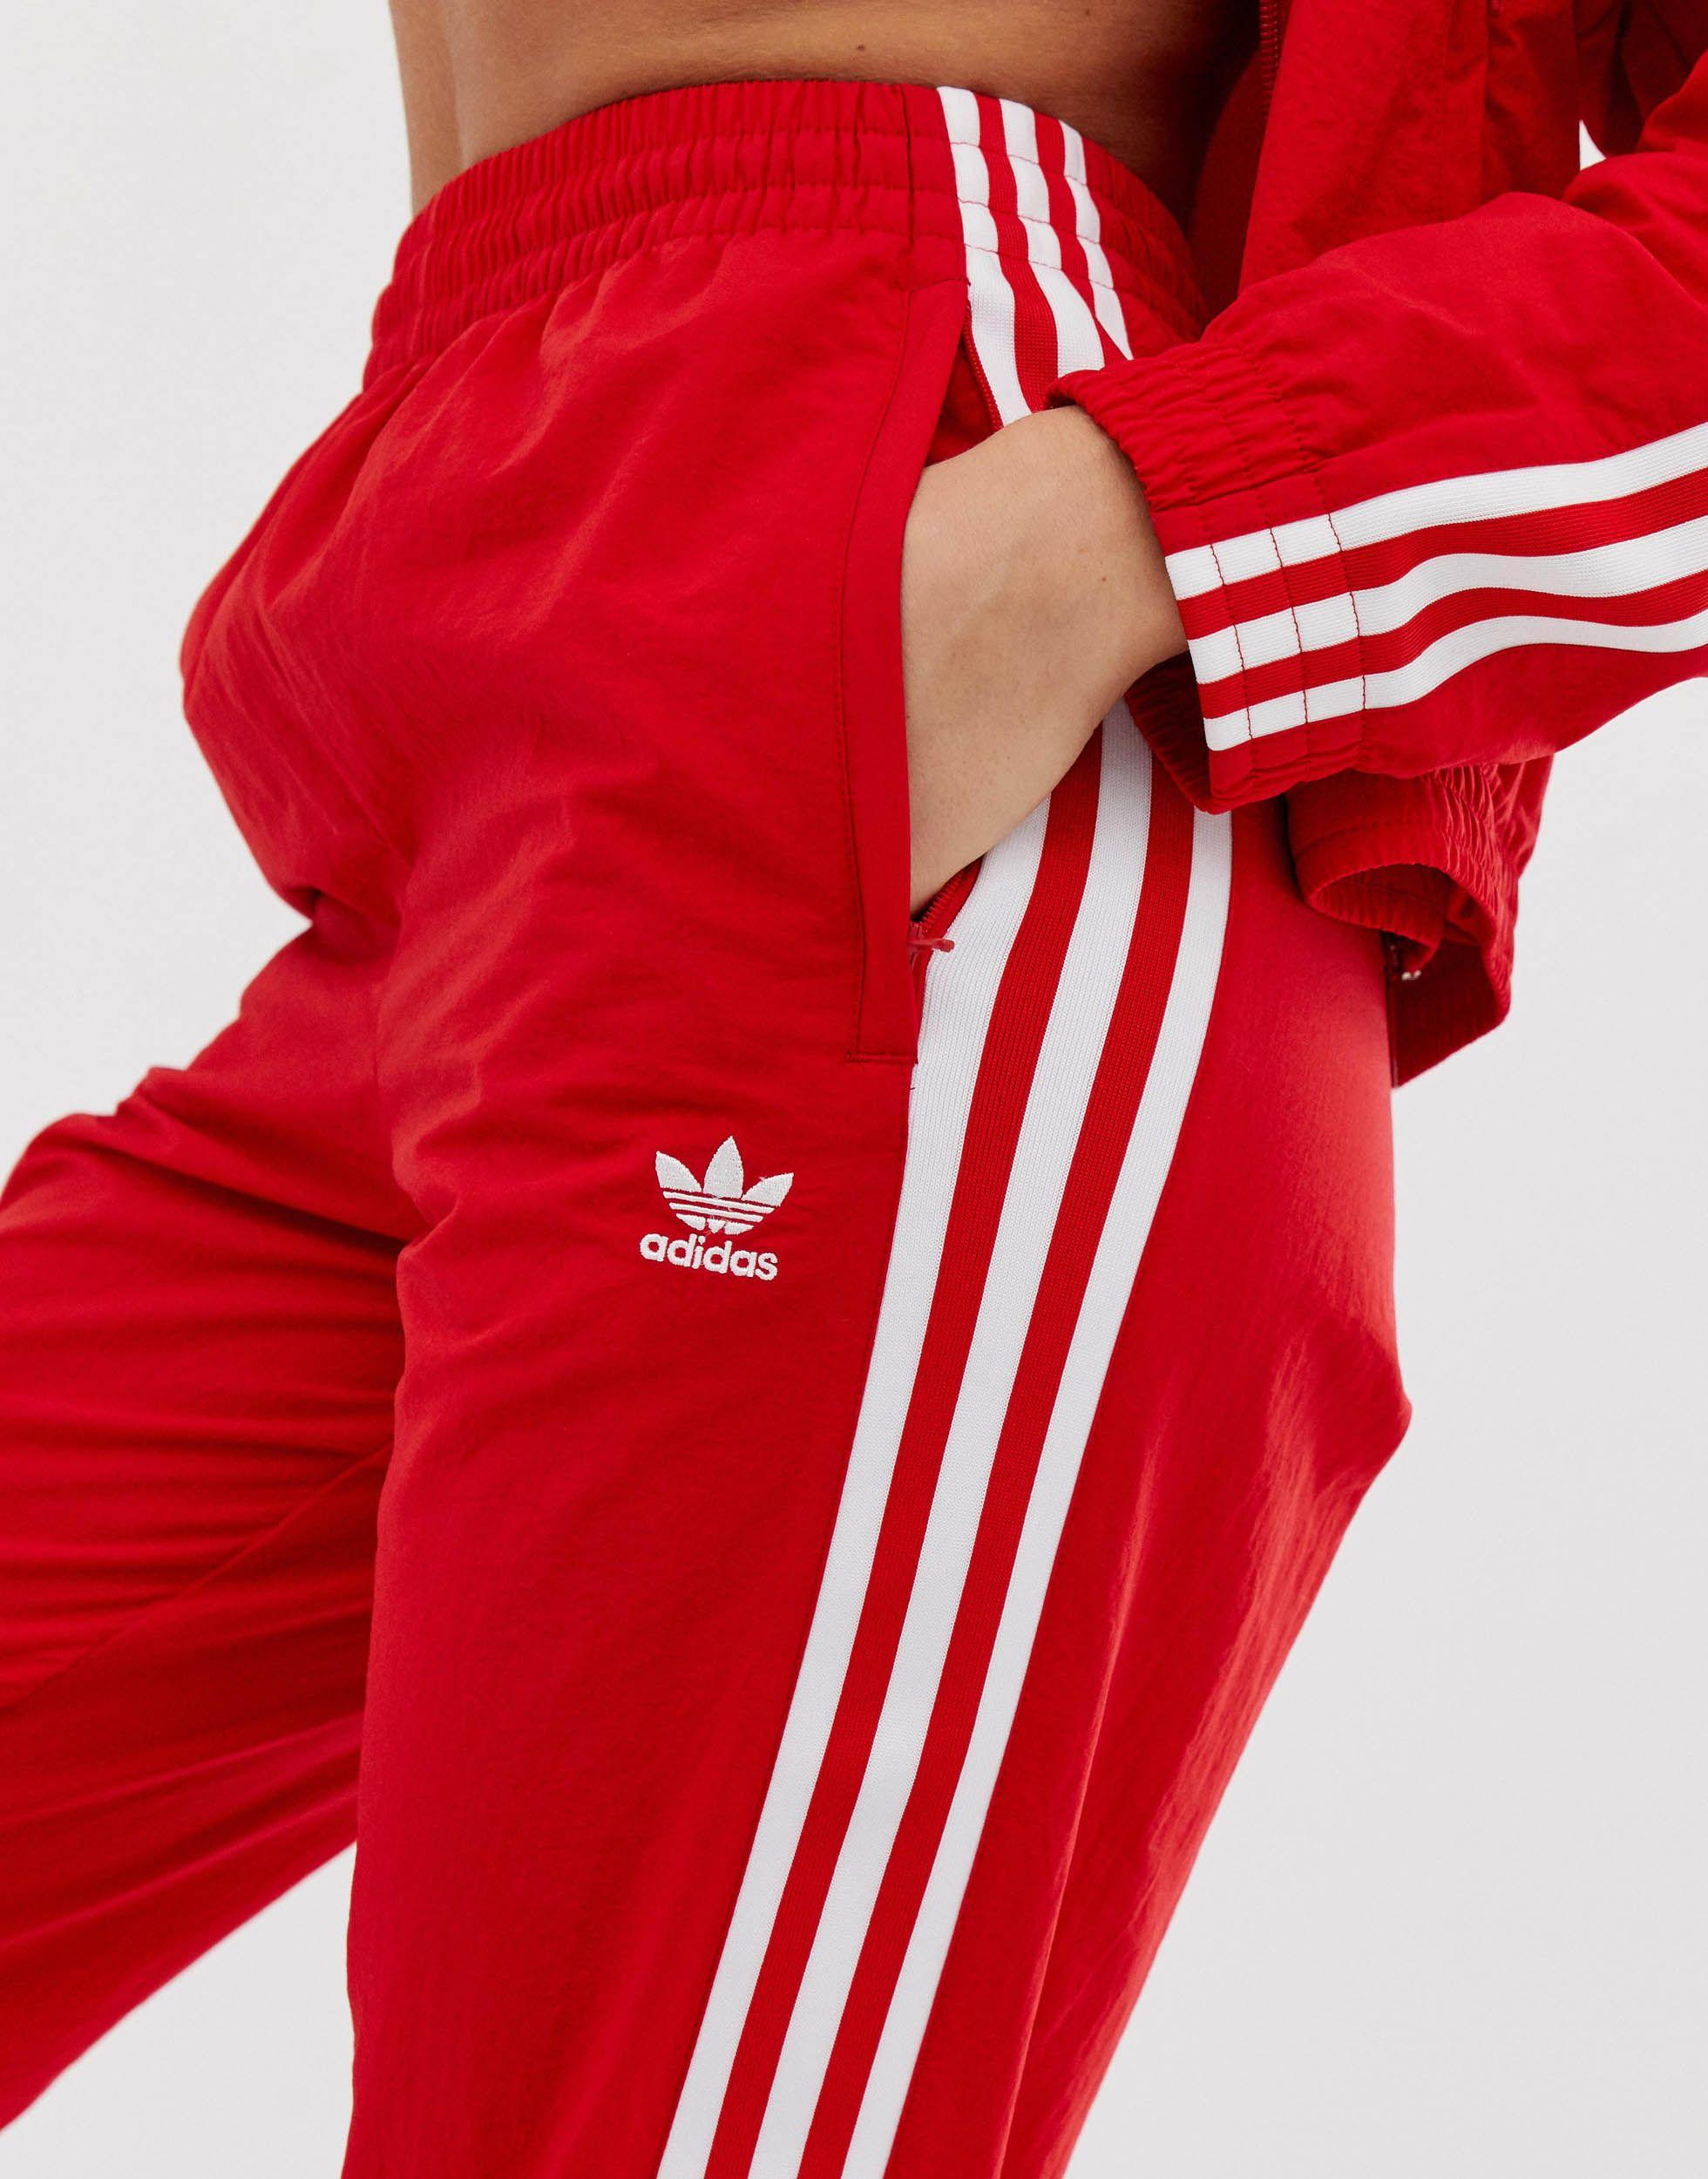 adidas Originals Adicolor Locked Up Logo Track Pants in Red | Lyst